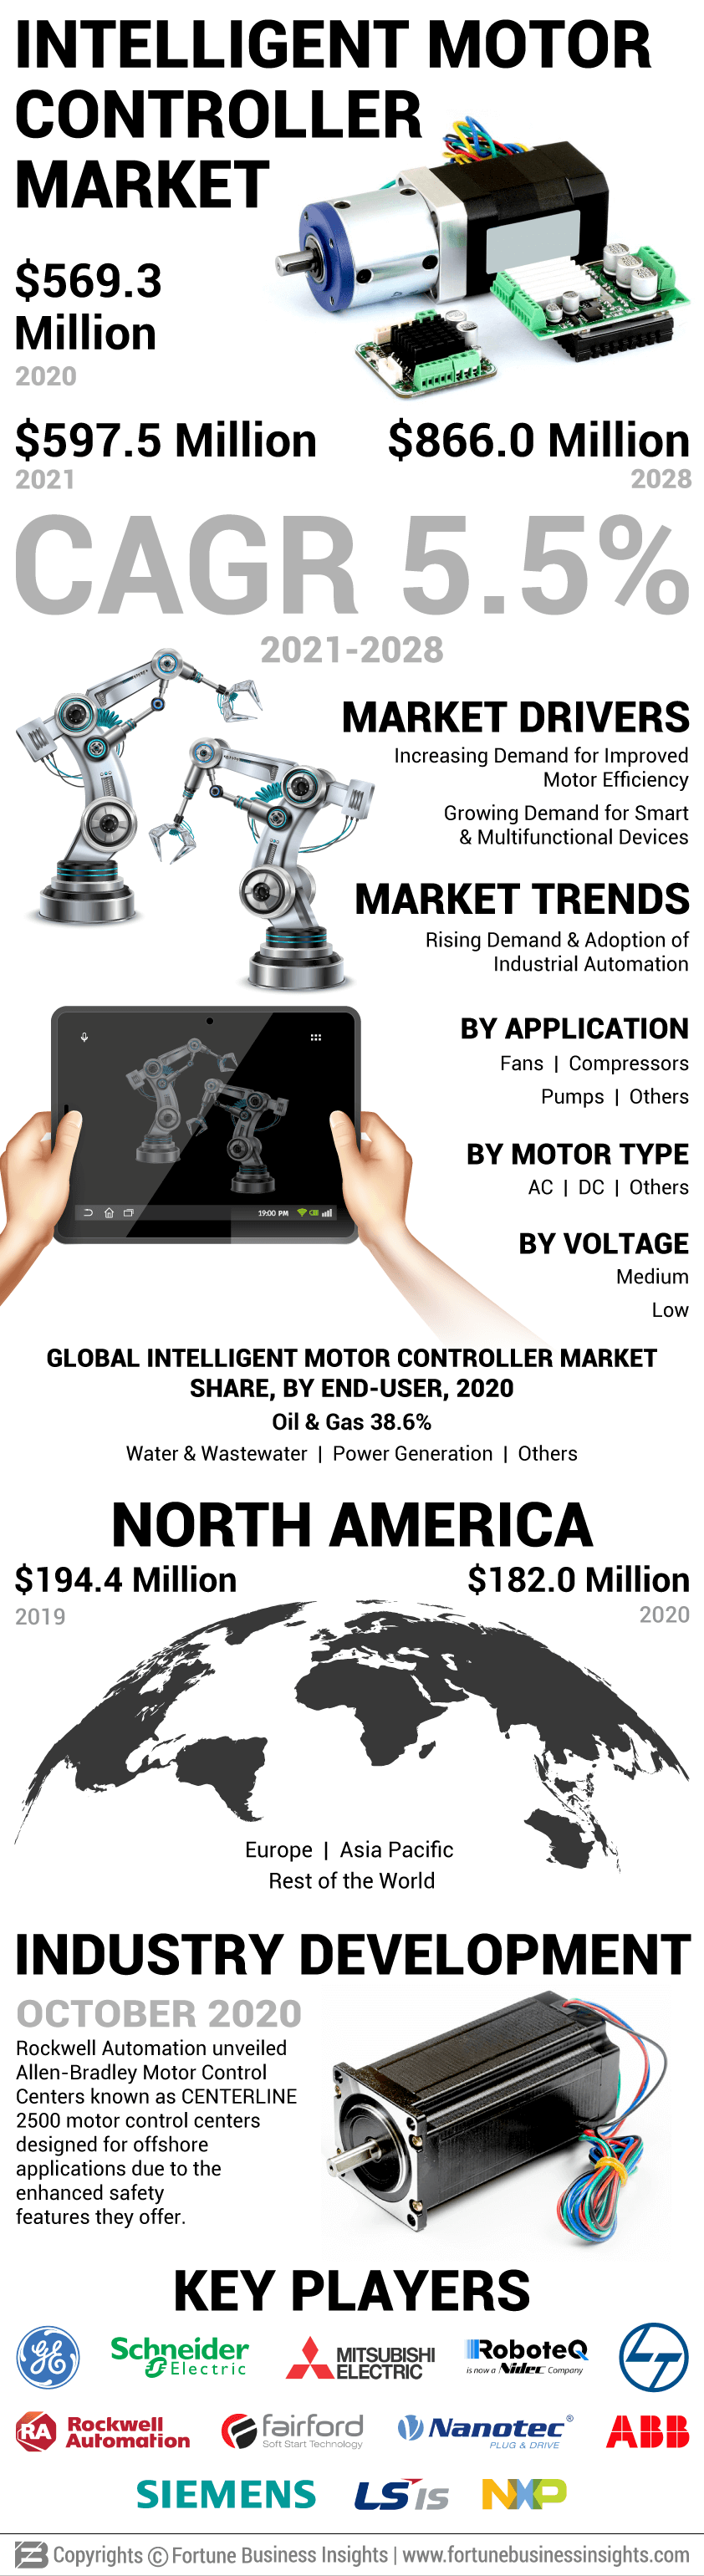 Intelligent Motor Controller Market